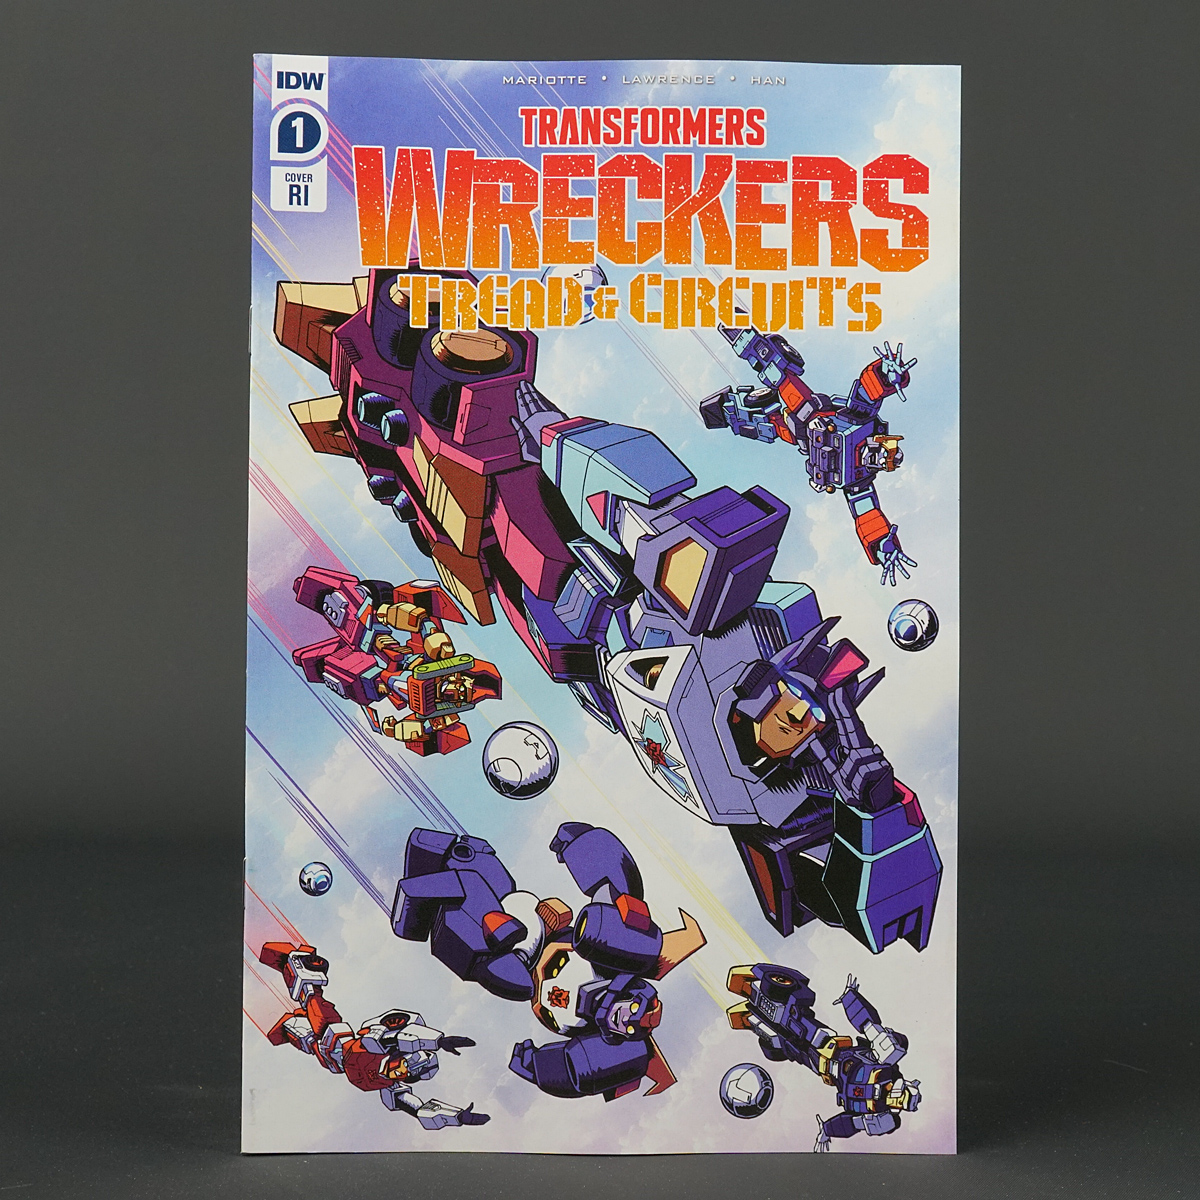 Transformers Wreckers TREAD & CIRCUITS #1 RI 1:10 IDW Comics 2021 AUG210539 1RI